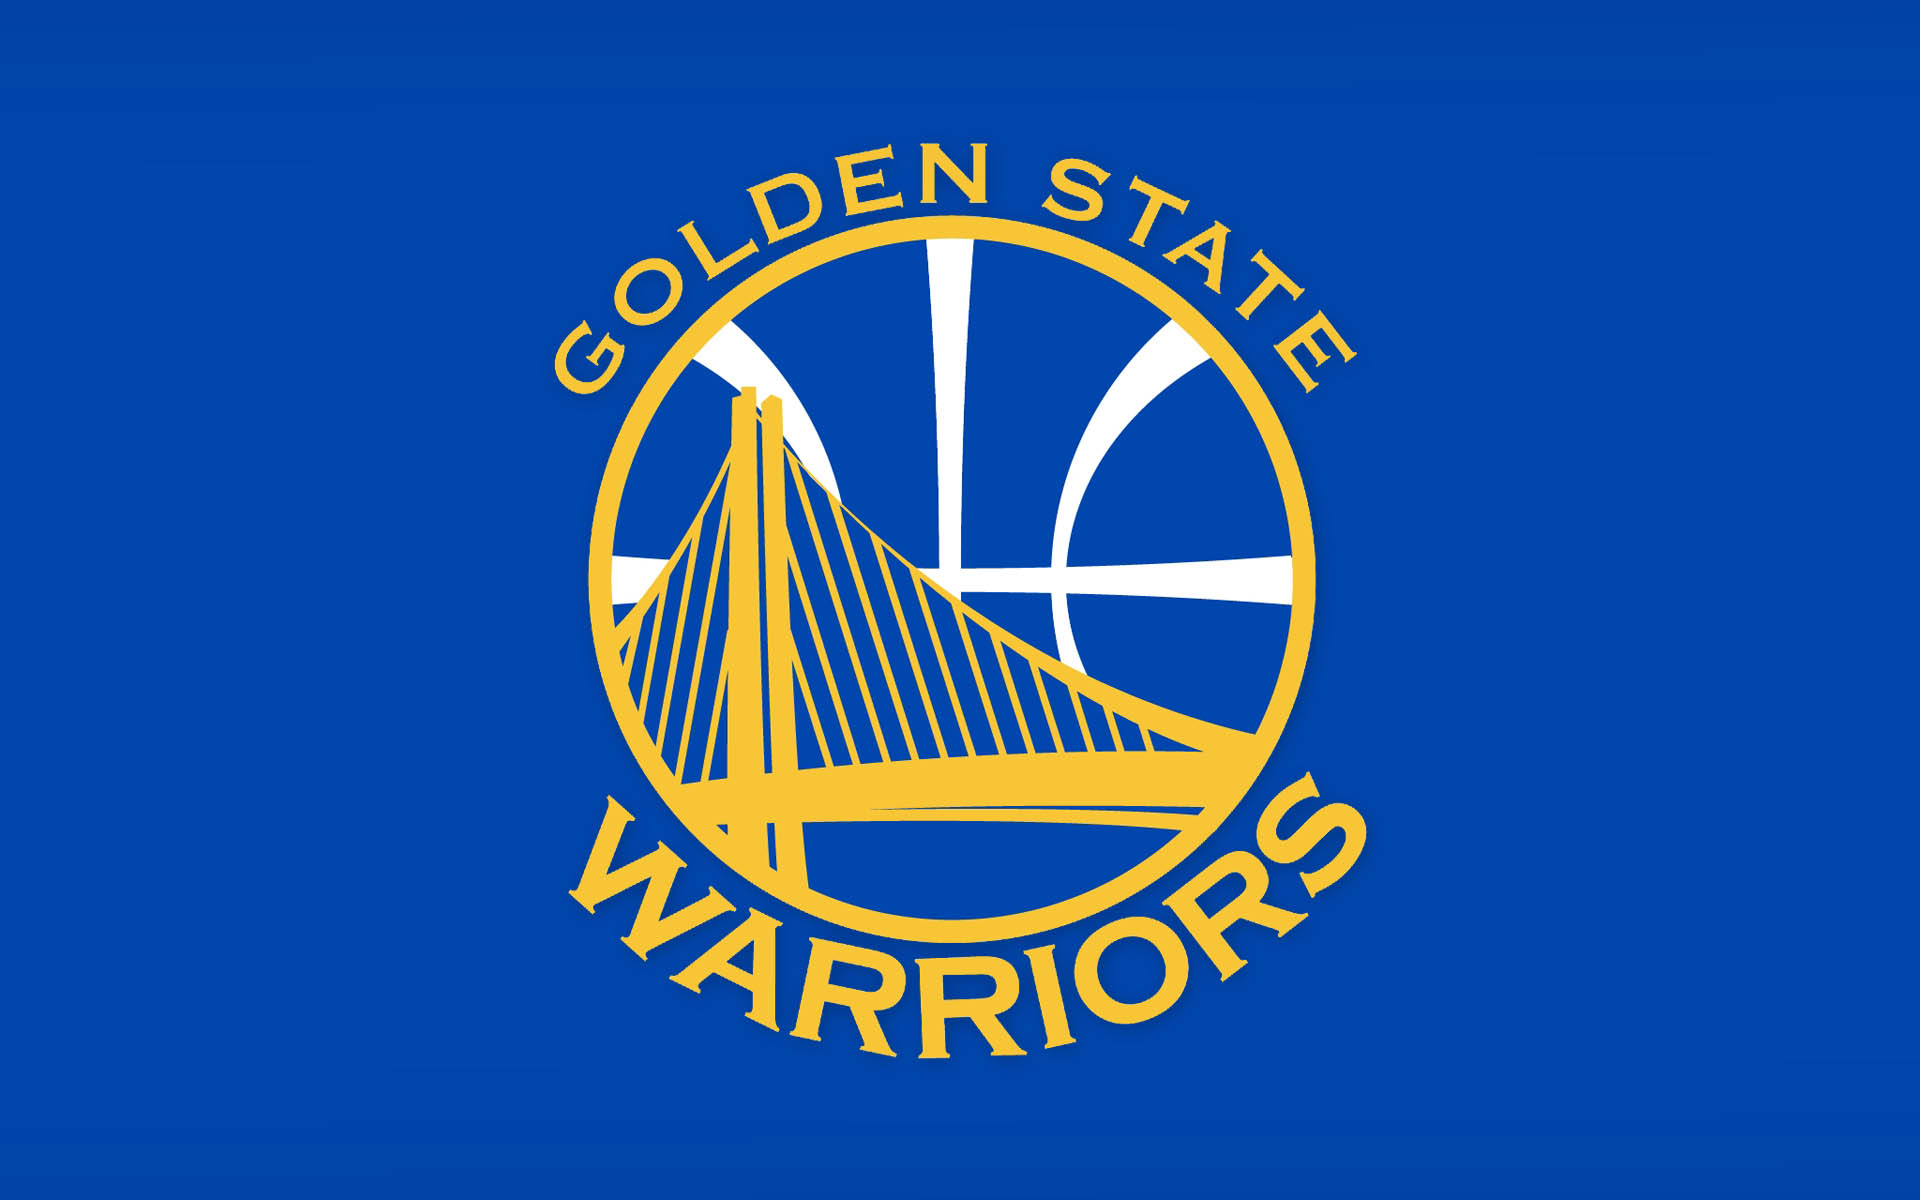 Golden State Warriors Wallpapers HD | PixelsTalk.Net